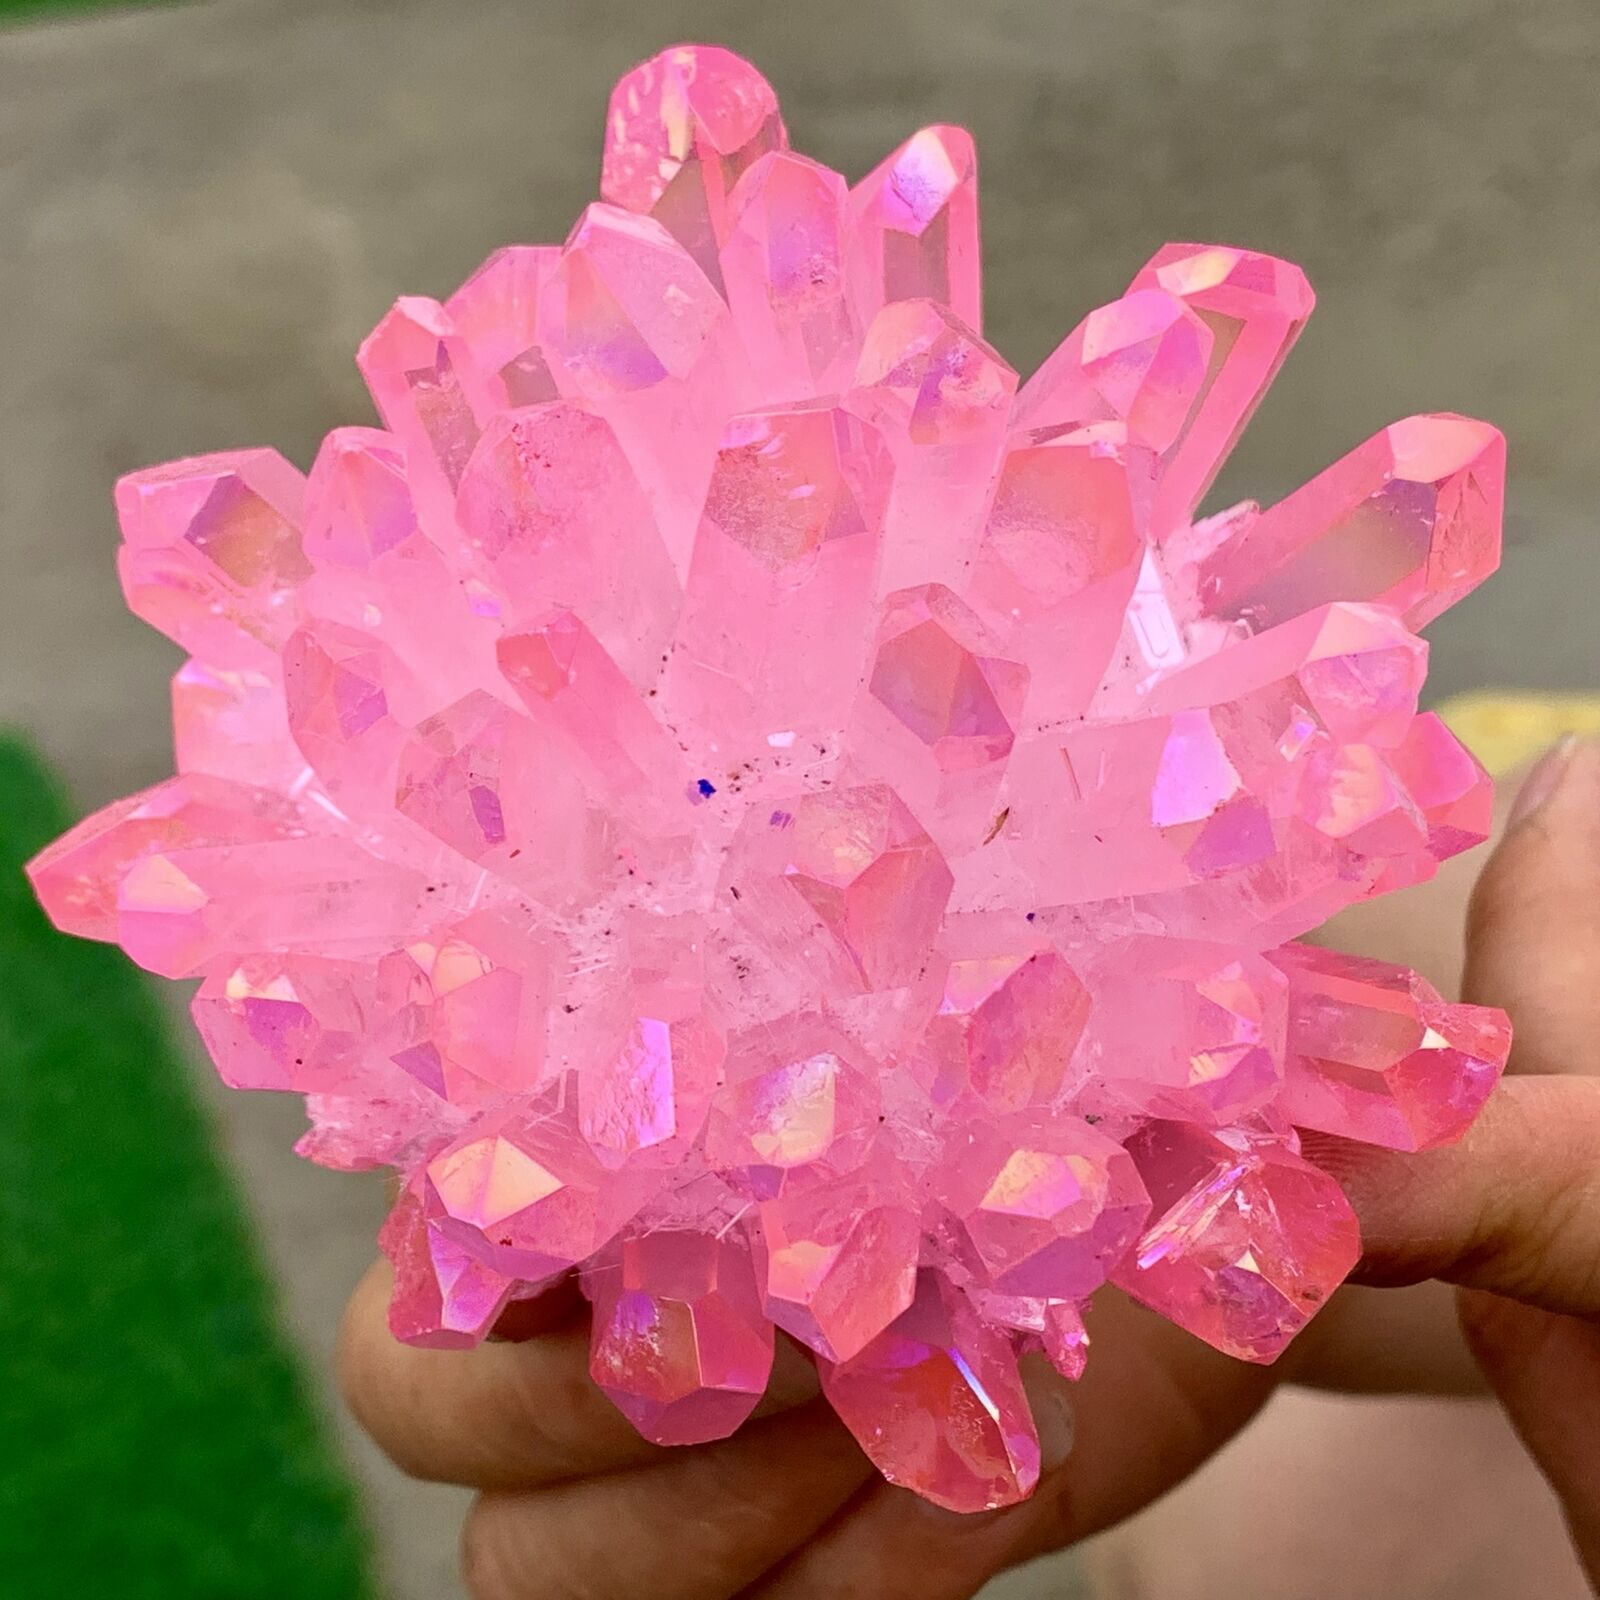 397G New Find pink PhantomQuartz Crystal Cluster MineralSpecimen